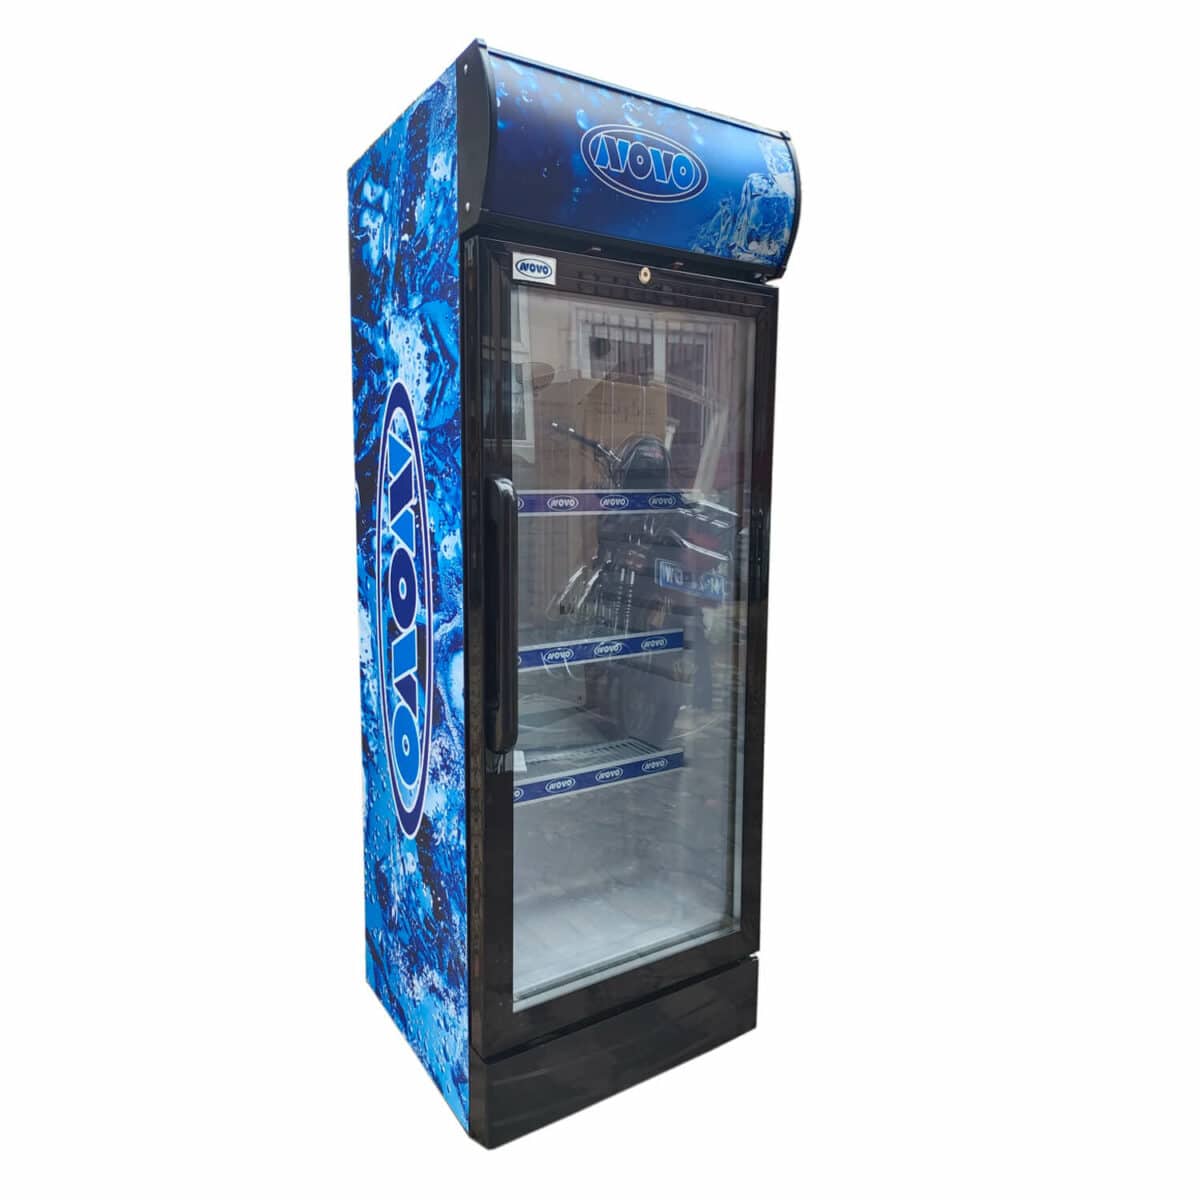 Novo 170 liter display fridge side view